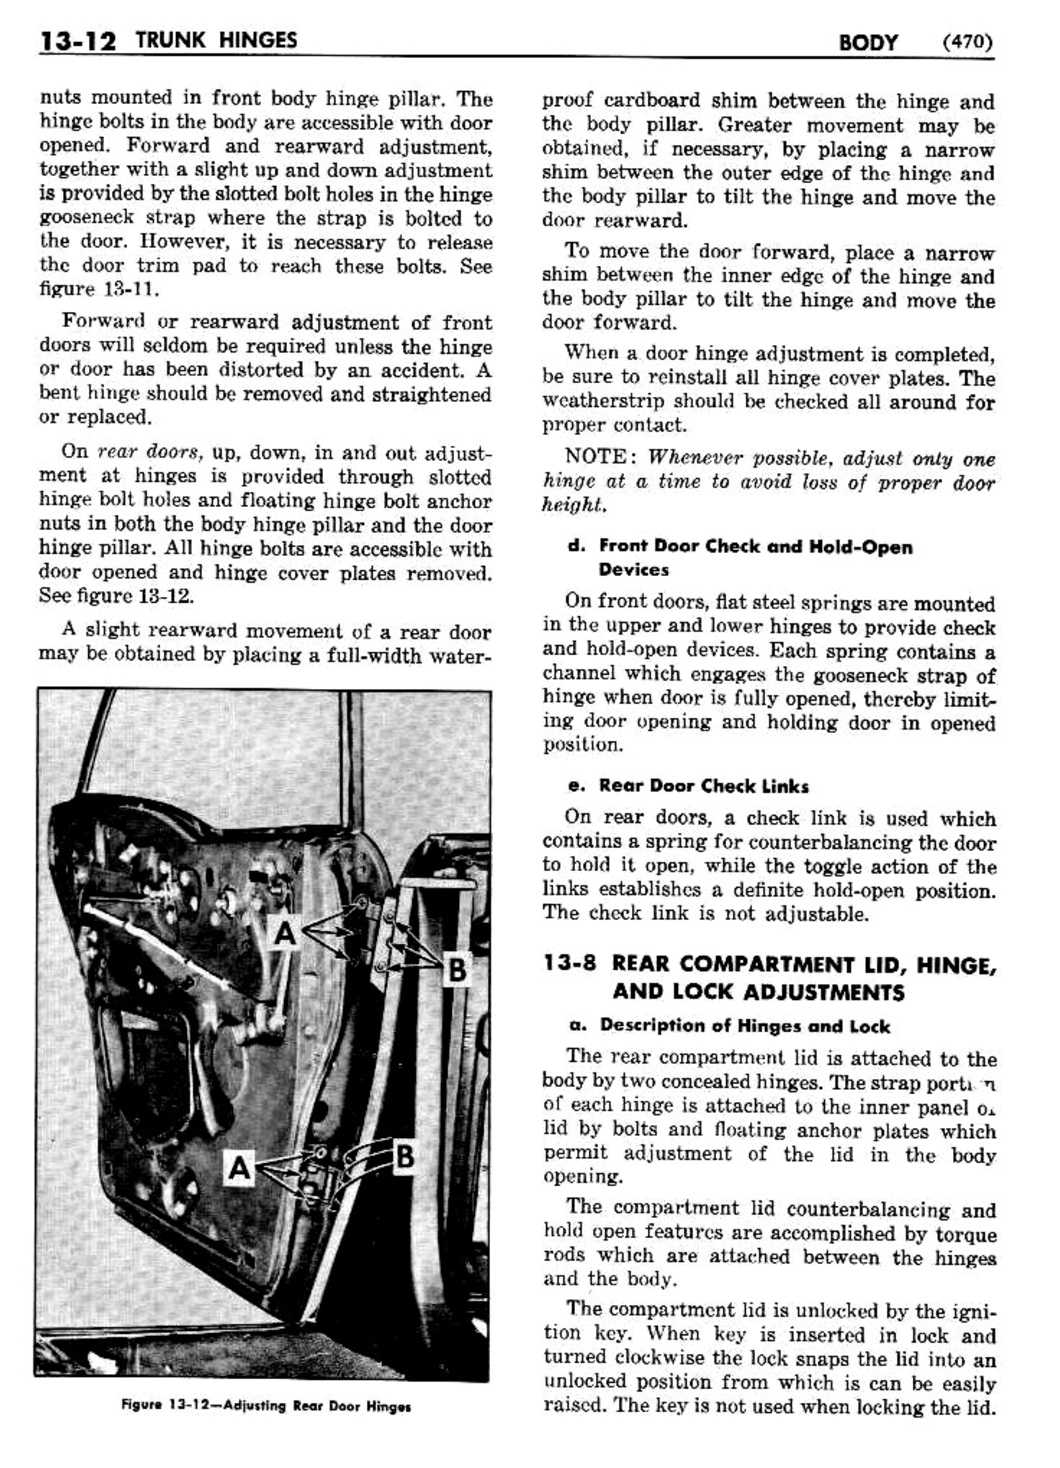 n_14 1956 Buick Shop Manual - Body-012-012.jpg